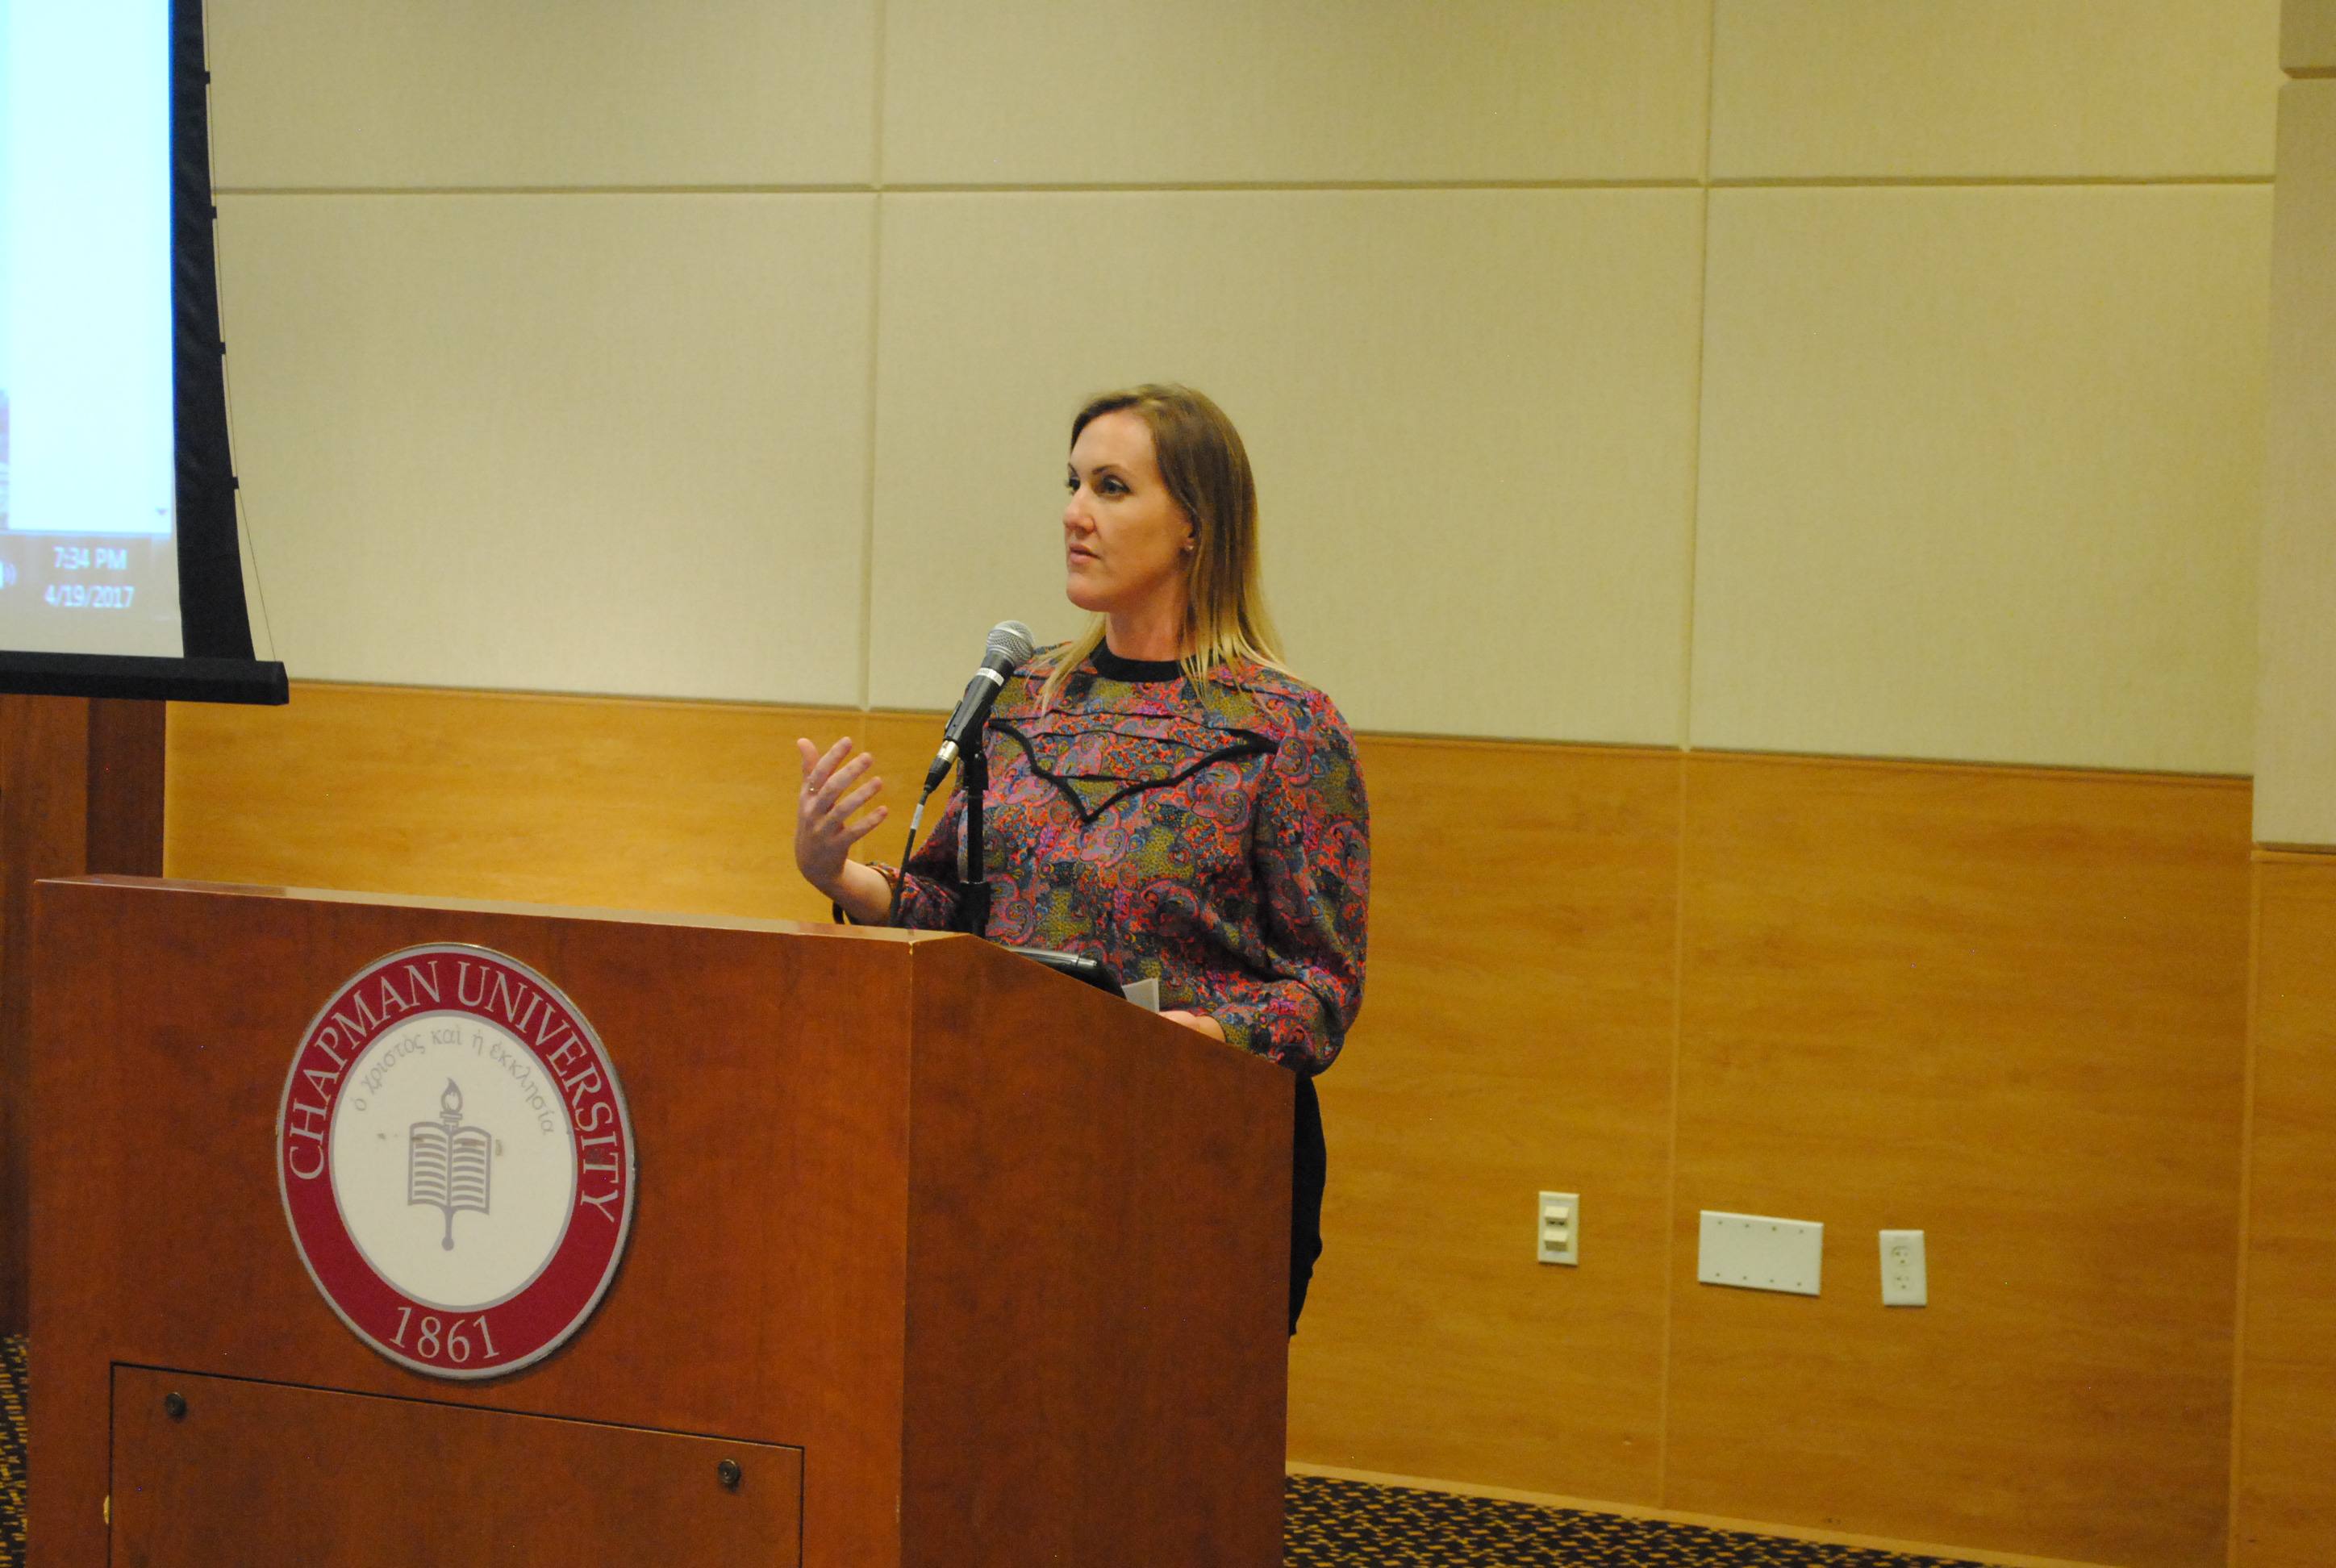 Image: Alison Williams speaking at Chapman University podium.